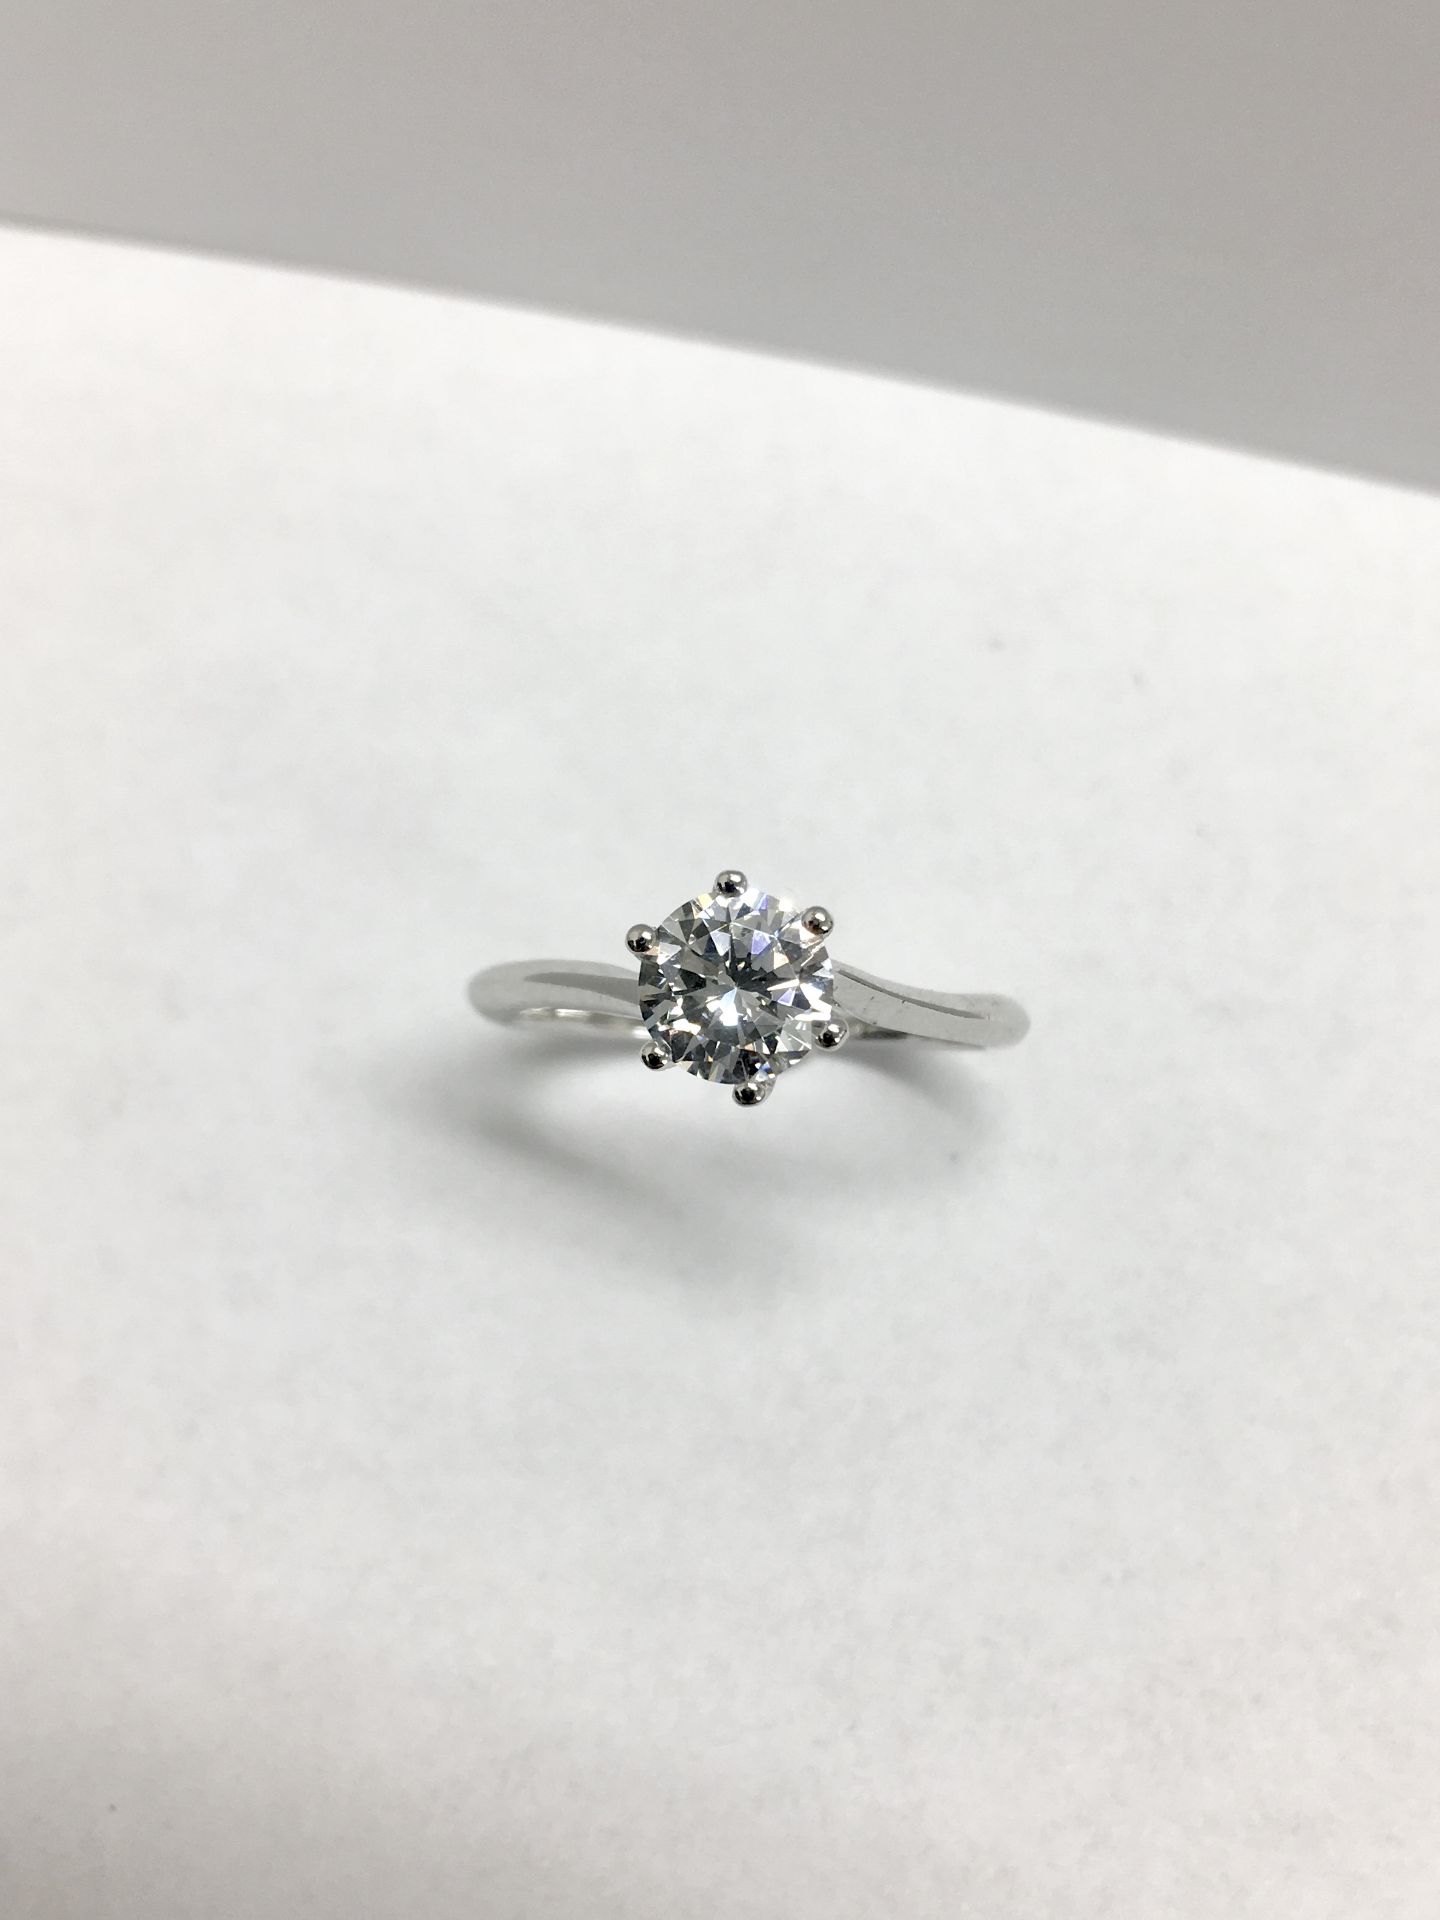 Platinum 6 claw twist diamond solitaire ring,0.50ct brilliant cut diamond D colour vs clarity,4.3gms